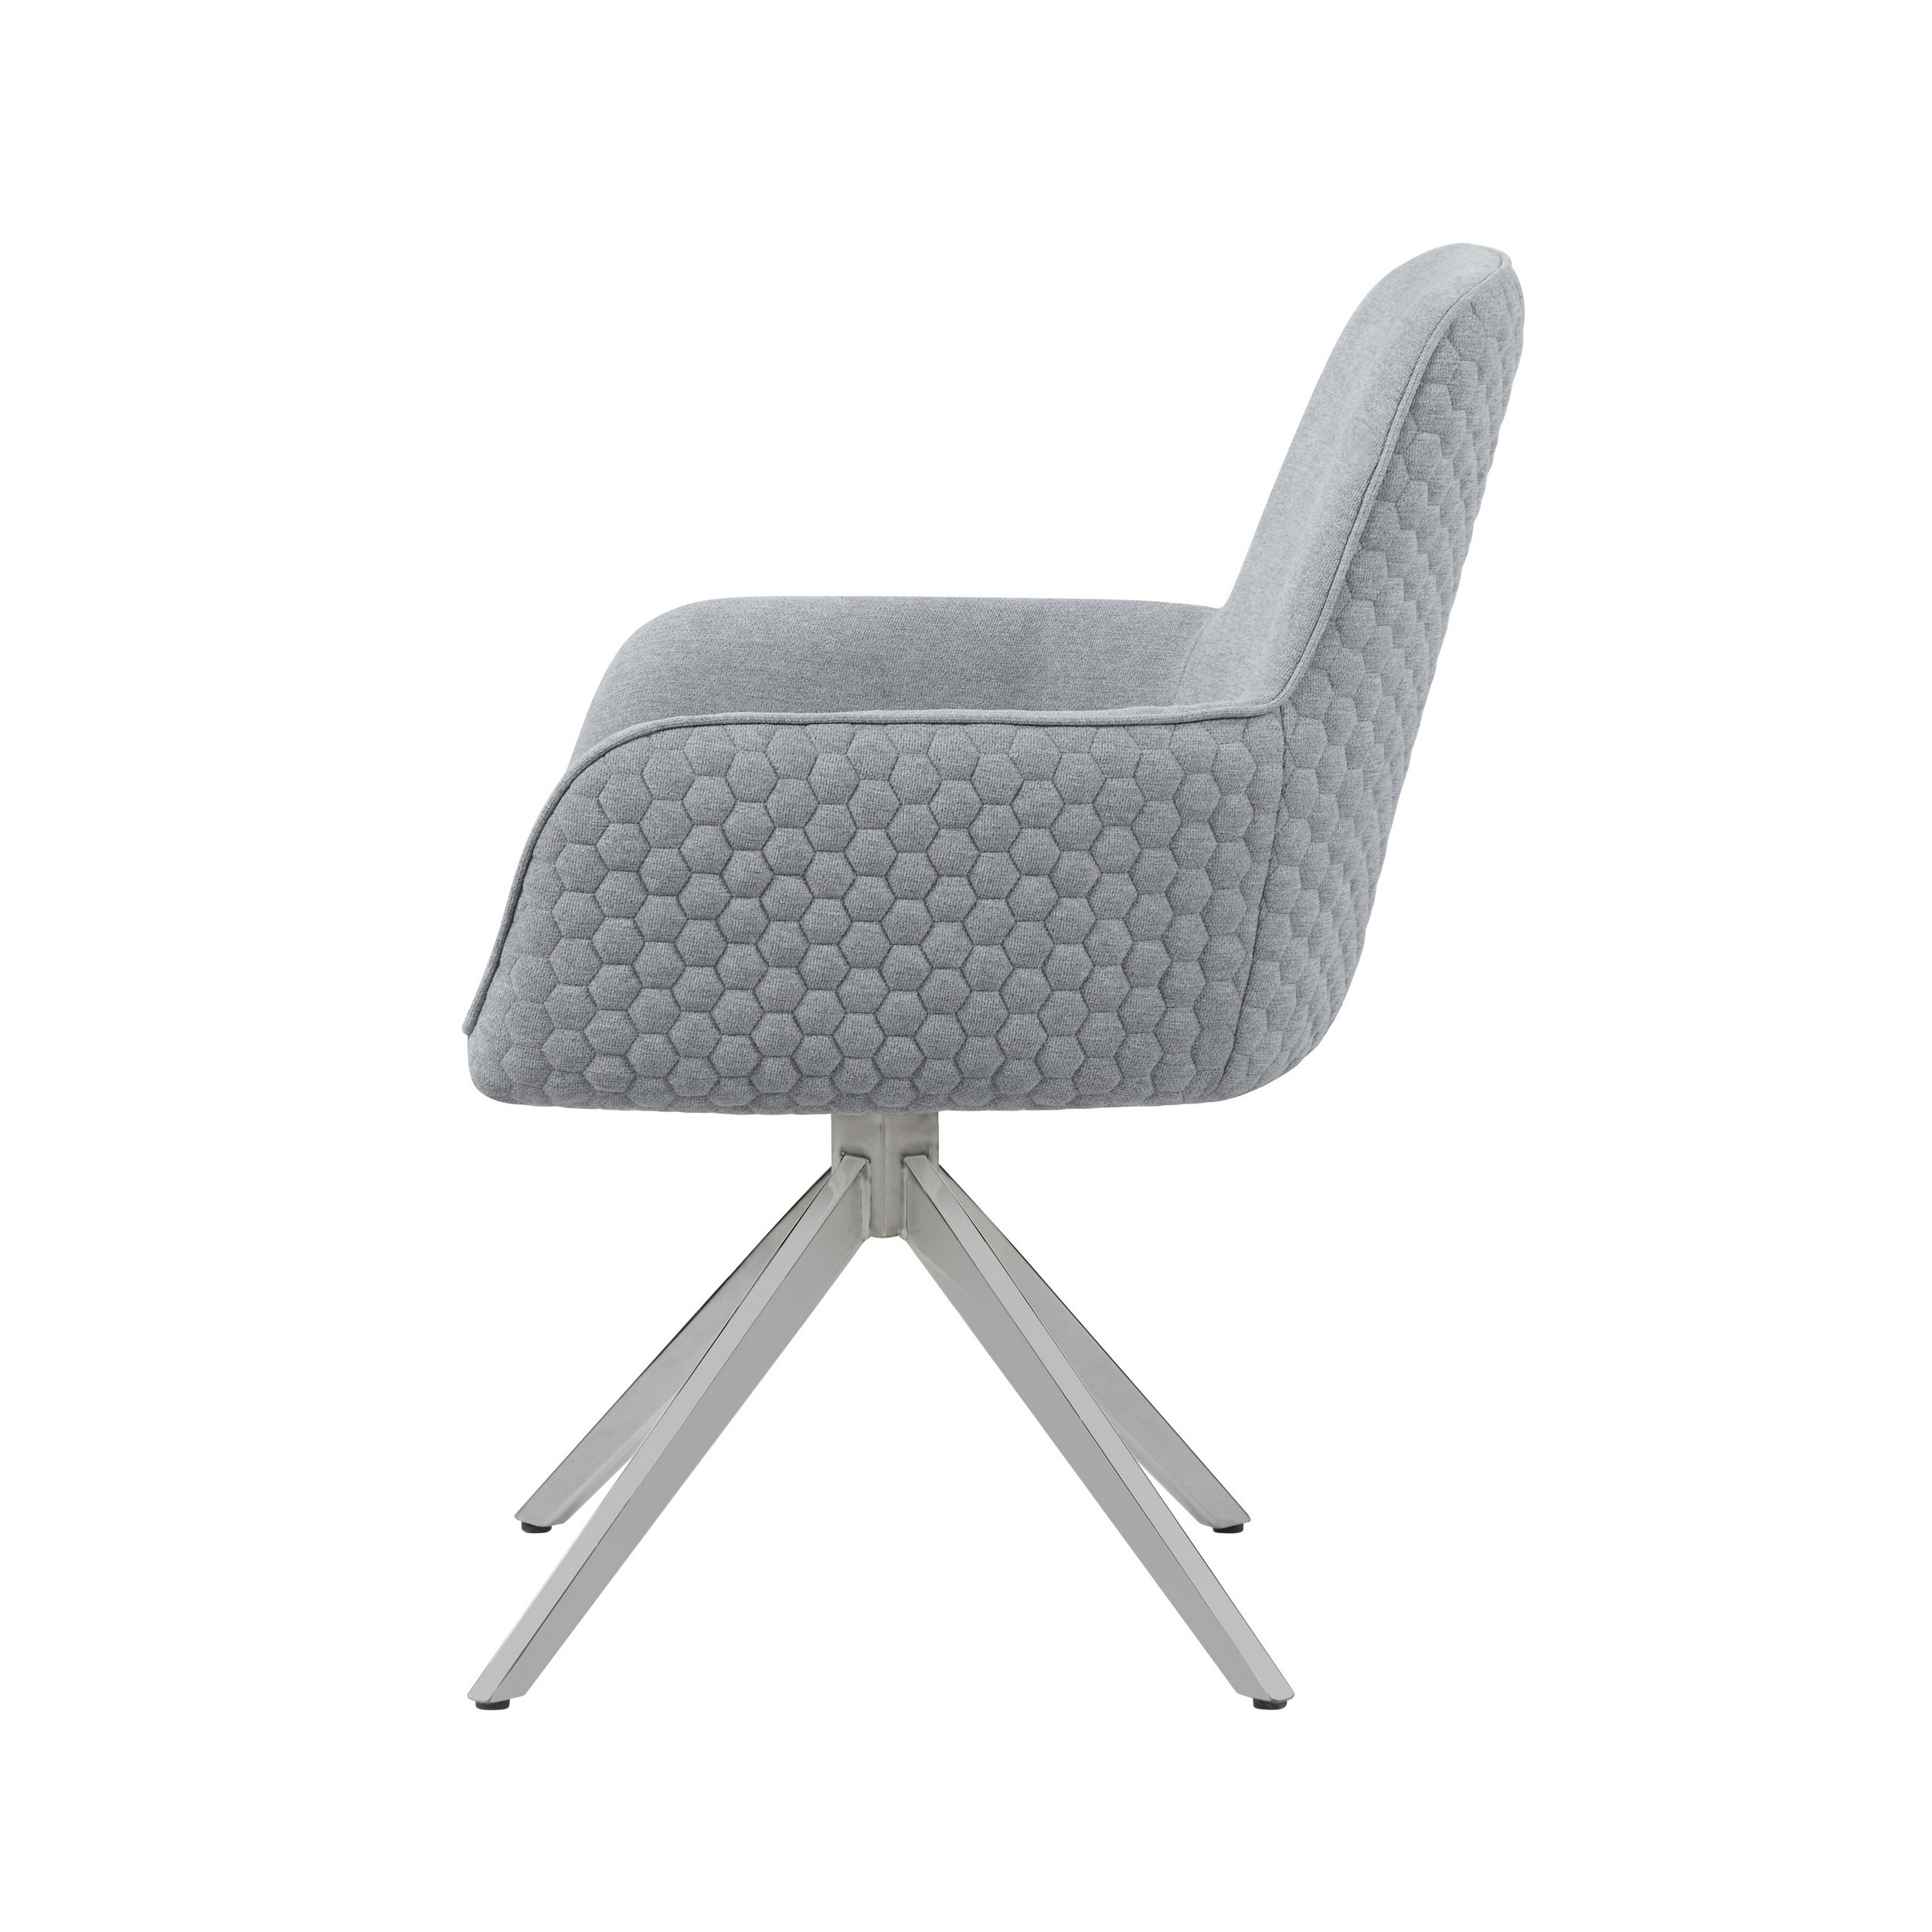 25 Inch Side Armchair, Honeycomb Tufted Design, Strong 5 Legged Chrome Base- Saltoro Sherpi